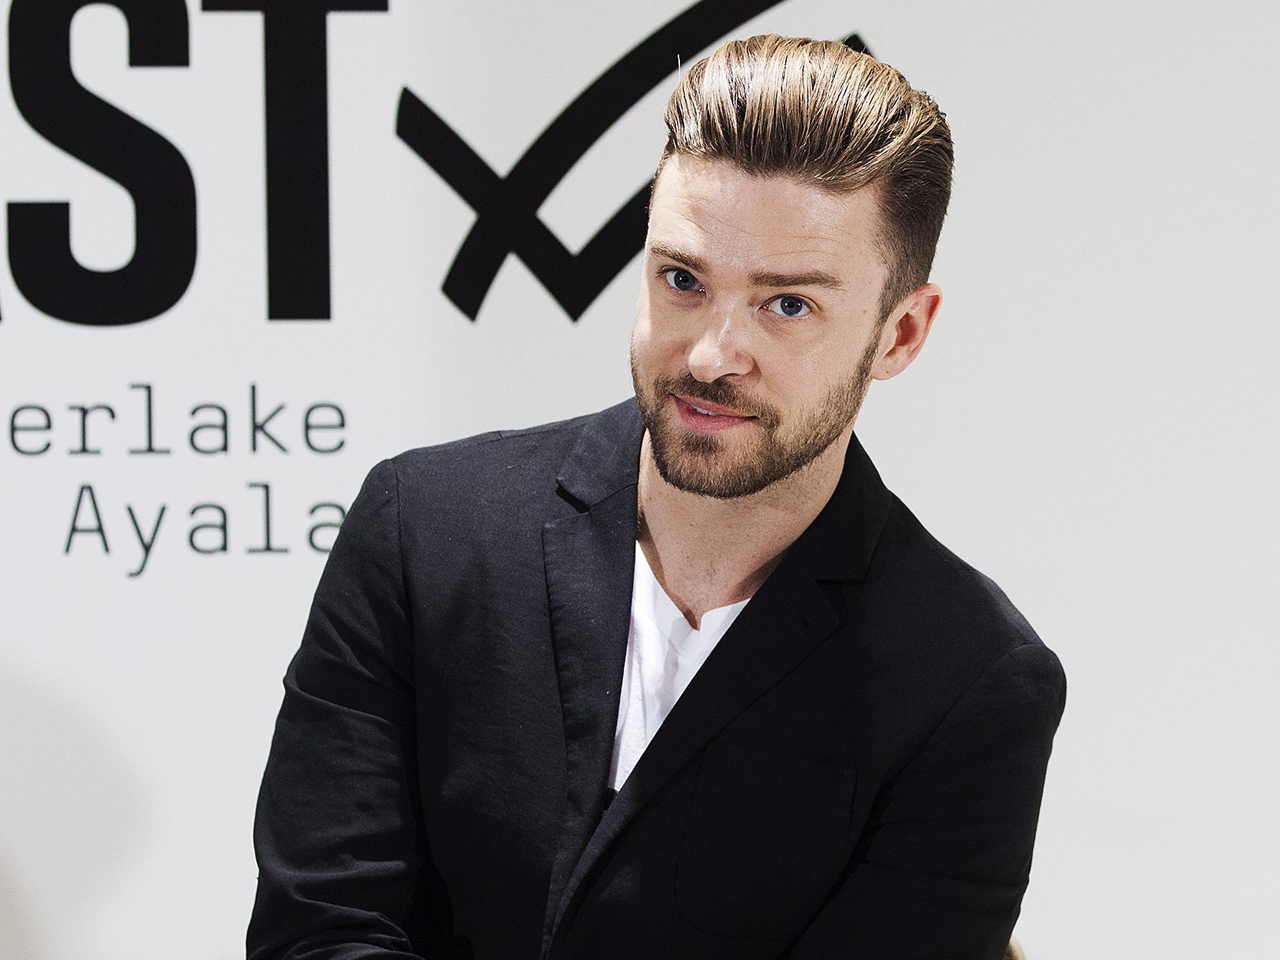 MTV Video Music Awards: Justin Timberlake, Macklemore lead with 6